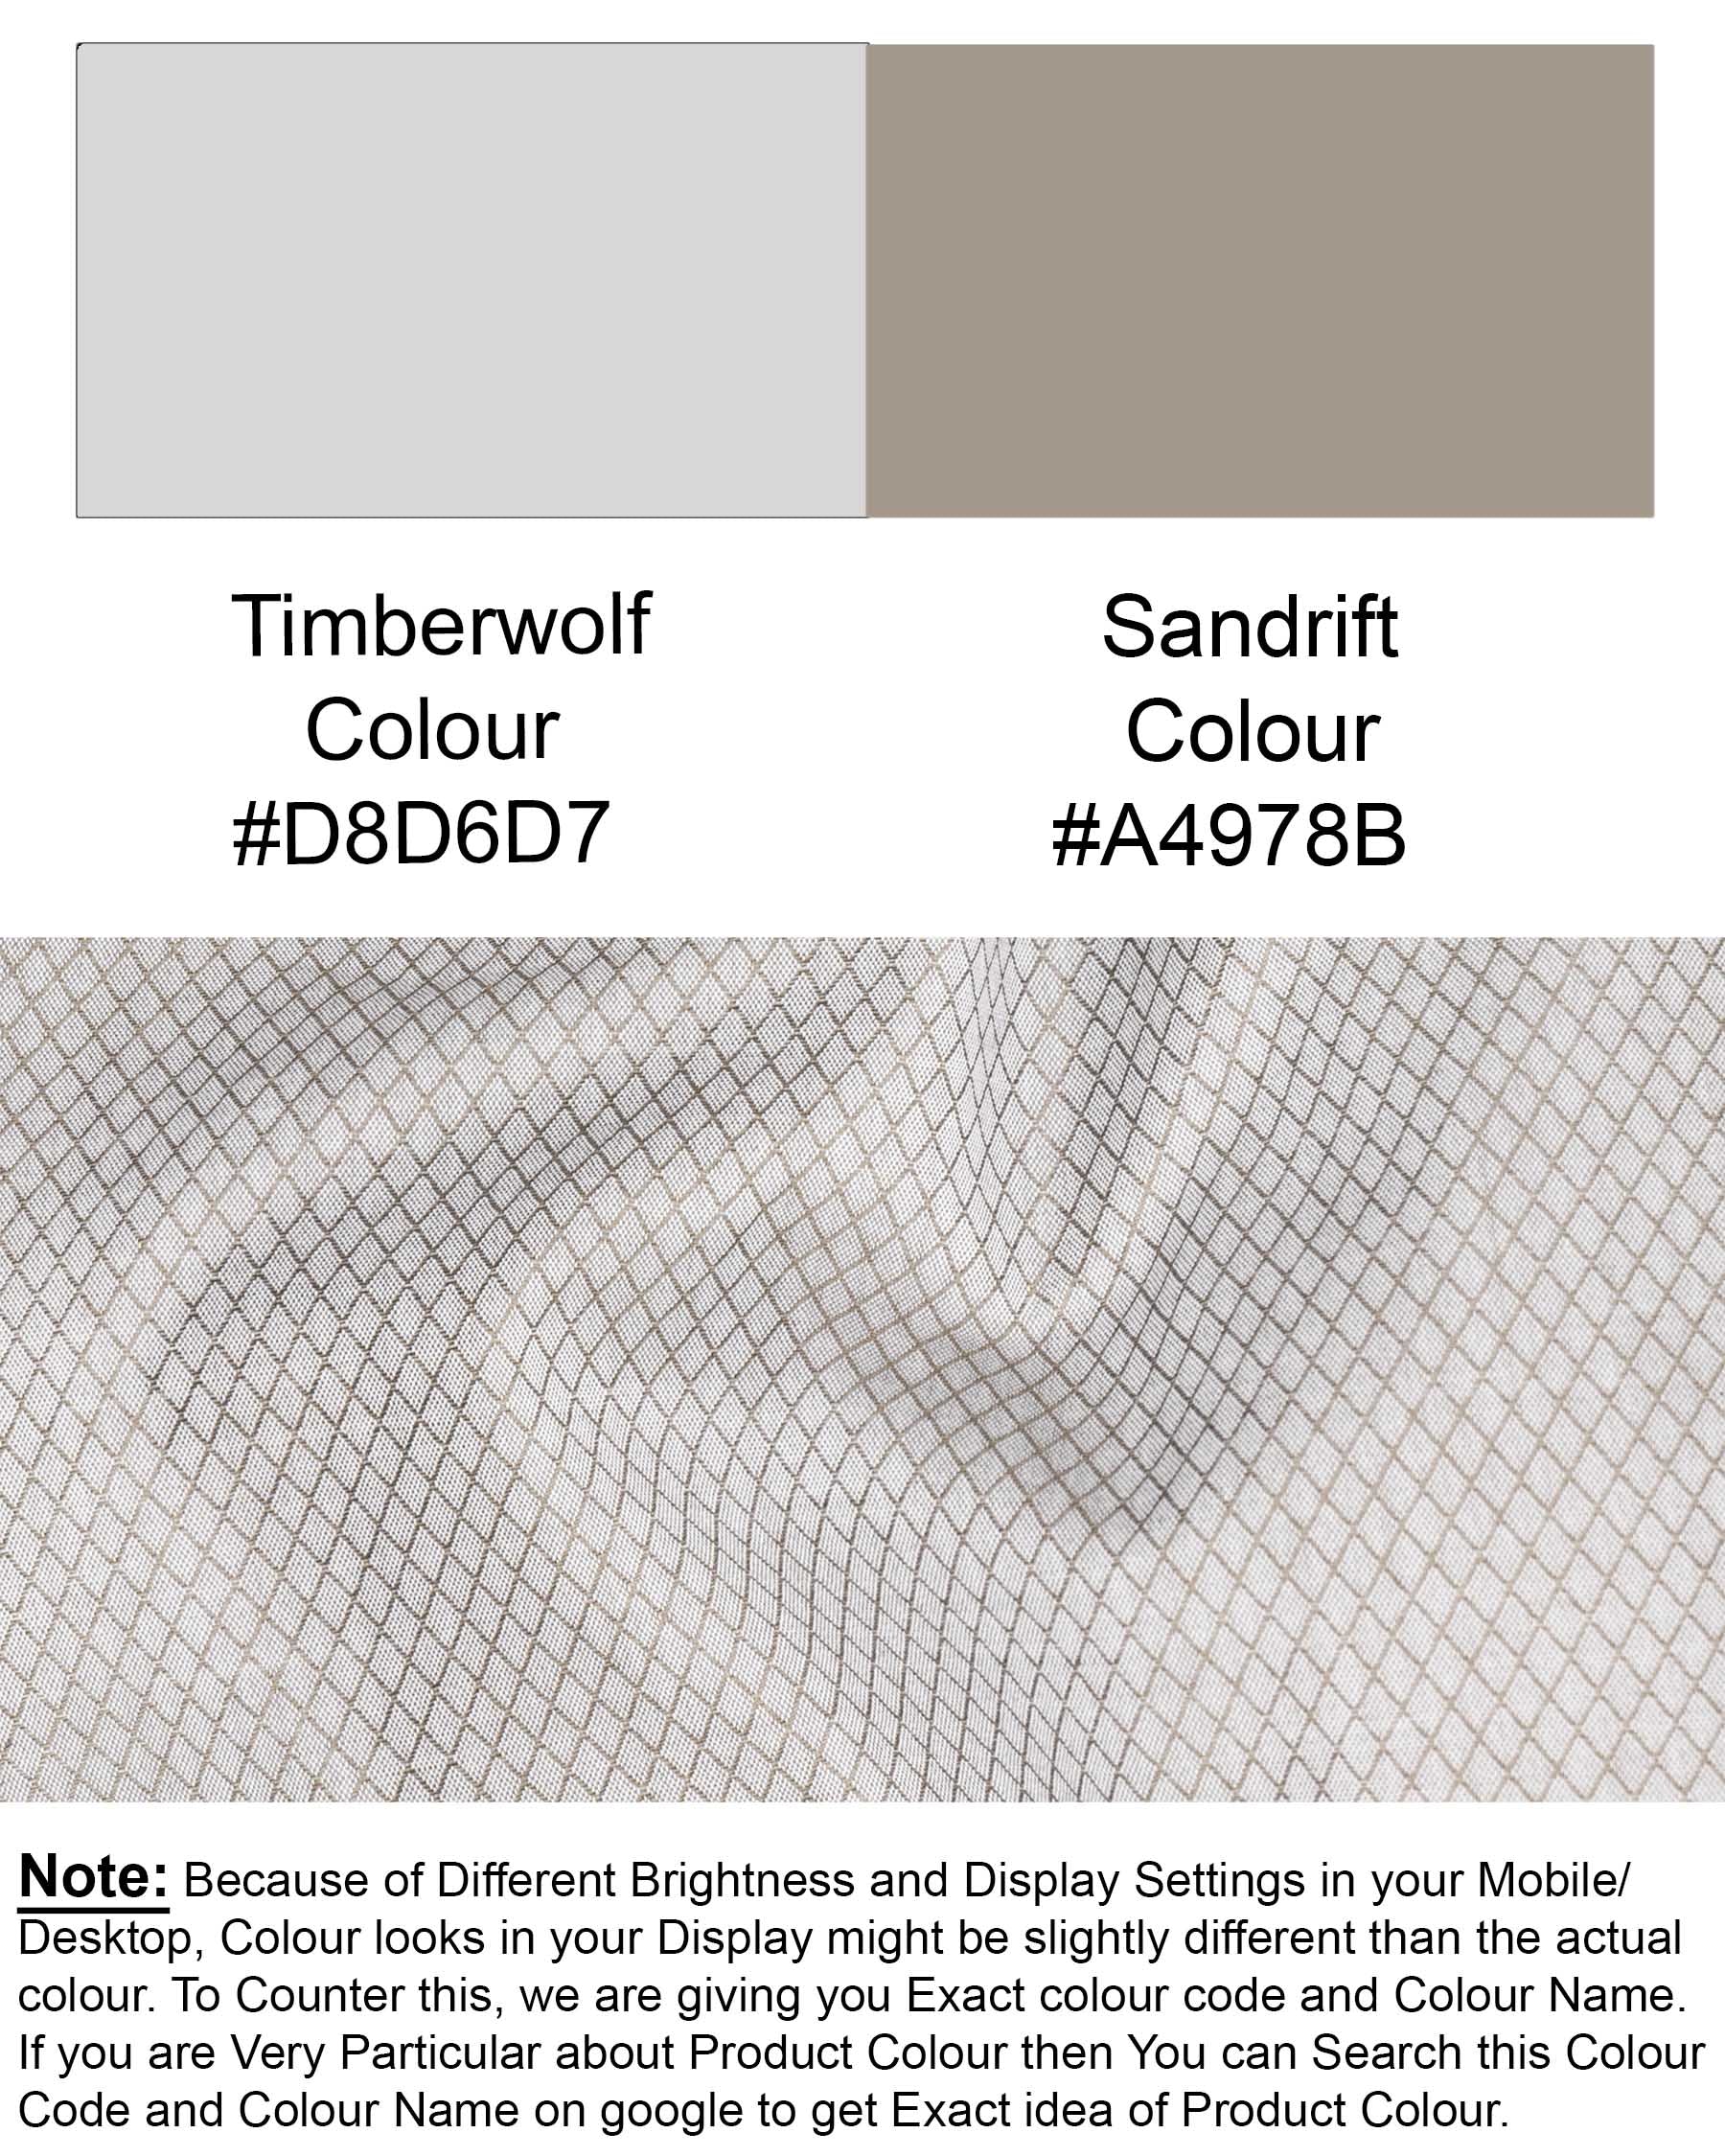 Timberwolf and Sandrift Geometrical Patterned Dobby Textured Premium Giza Cotton Shirt 6975-CA-38,6975-CA-38,6975-CA-39,6975-CA-39,6975-CA-40,6975-CA-40,6975-CA-42,6975-CA-42,6975-CA-44,6975-CA-44,6975-CA-46,6975-CA-46,6975-CA-48,6975-CA-48,6975-CA-50,6975-CA-50,6975-CA-52,6975-CA-52